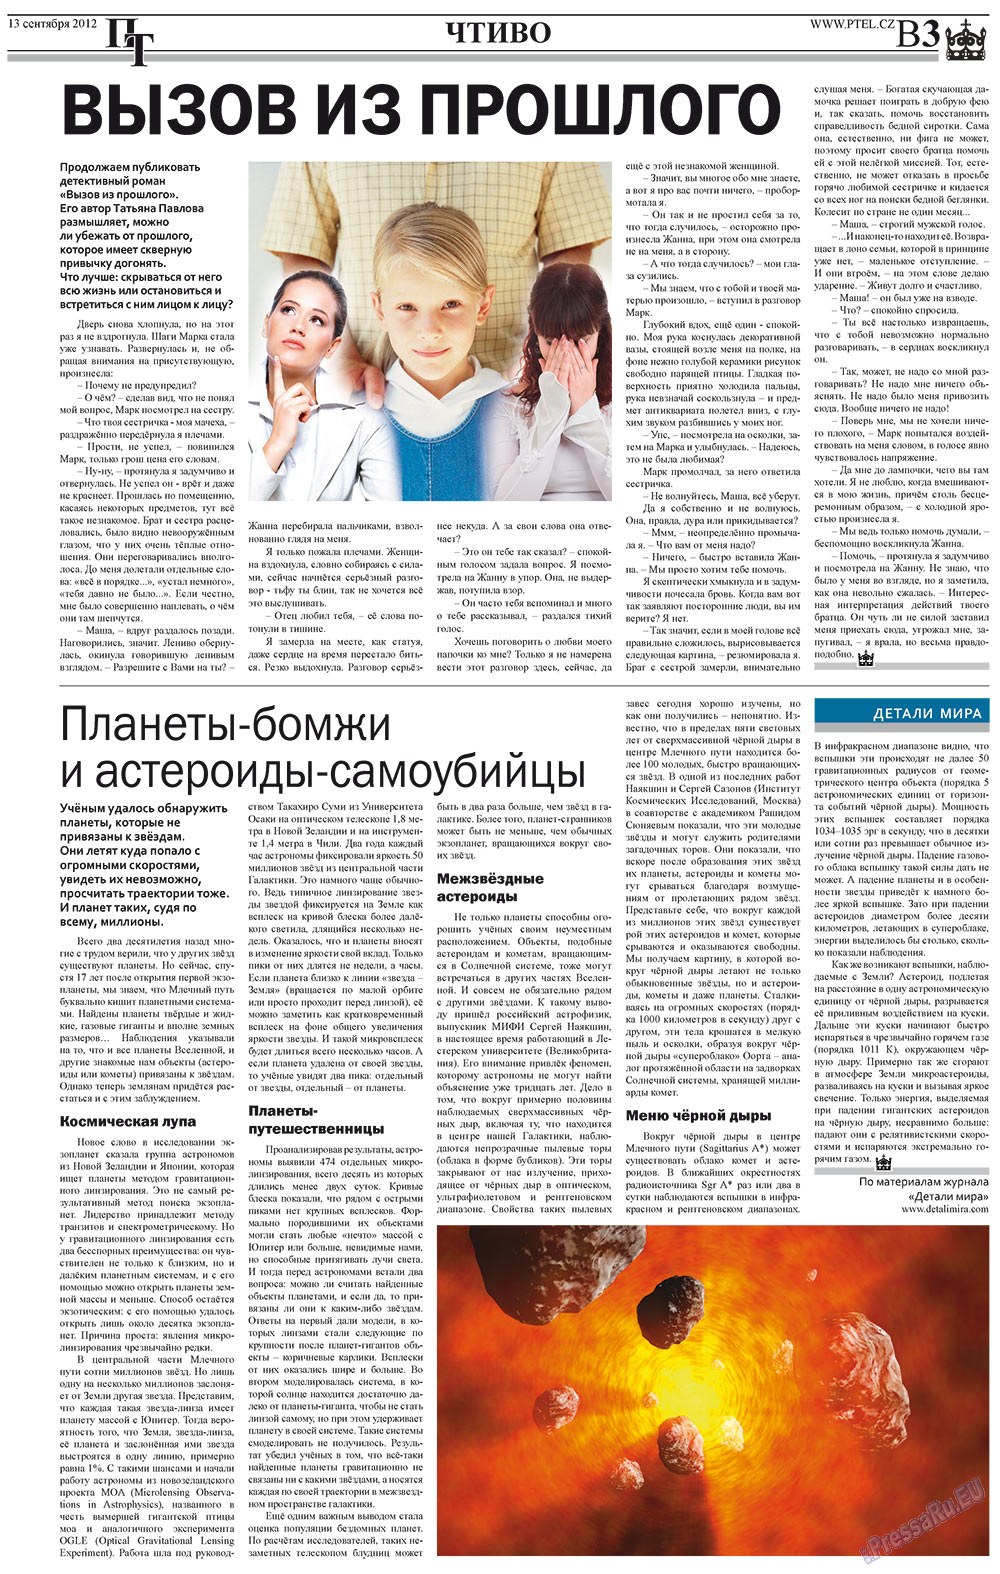 Пражский телеграф, газета. 2012 №36 стр.11